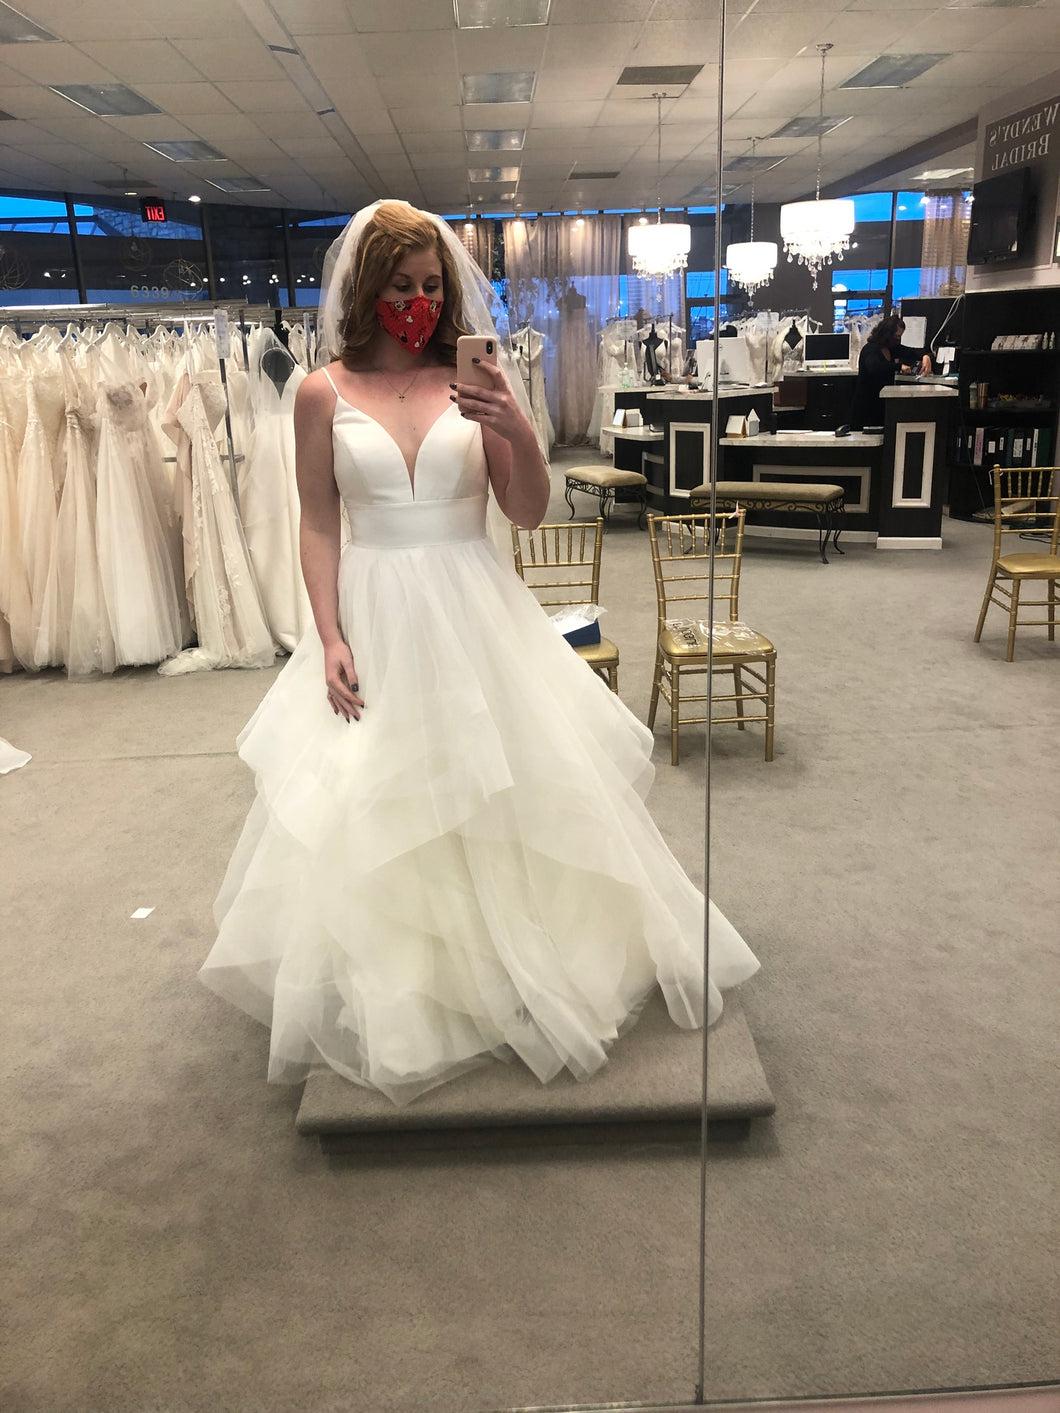 Stella york '6988' wedding dress size-12 NEW